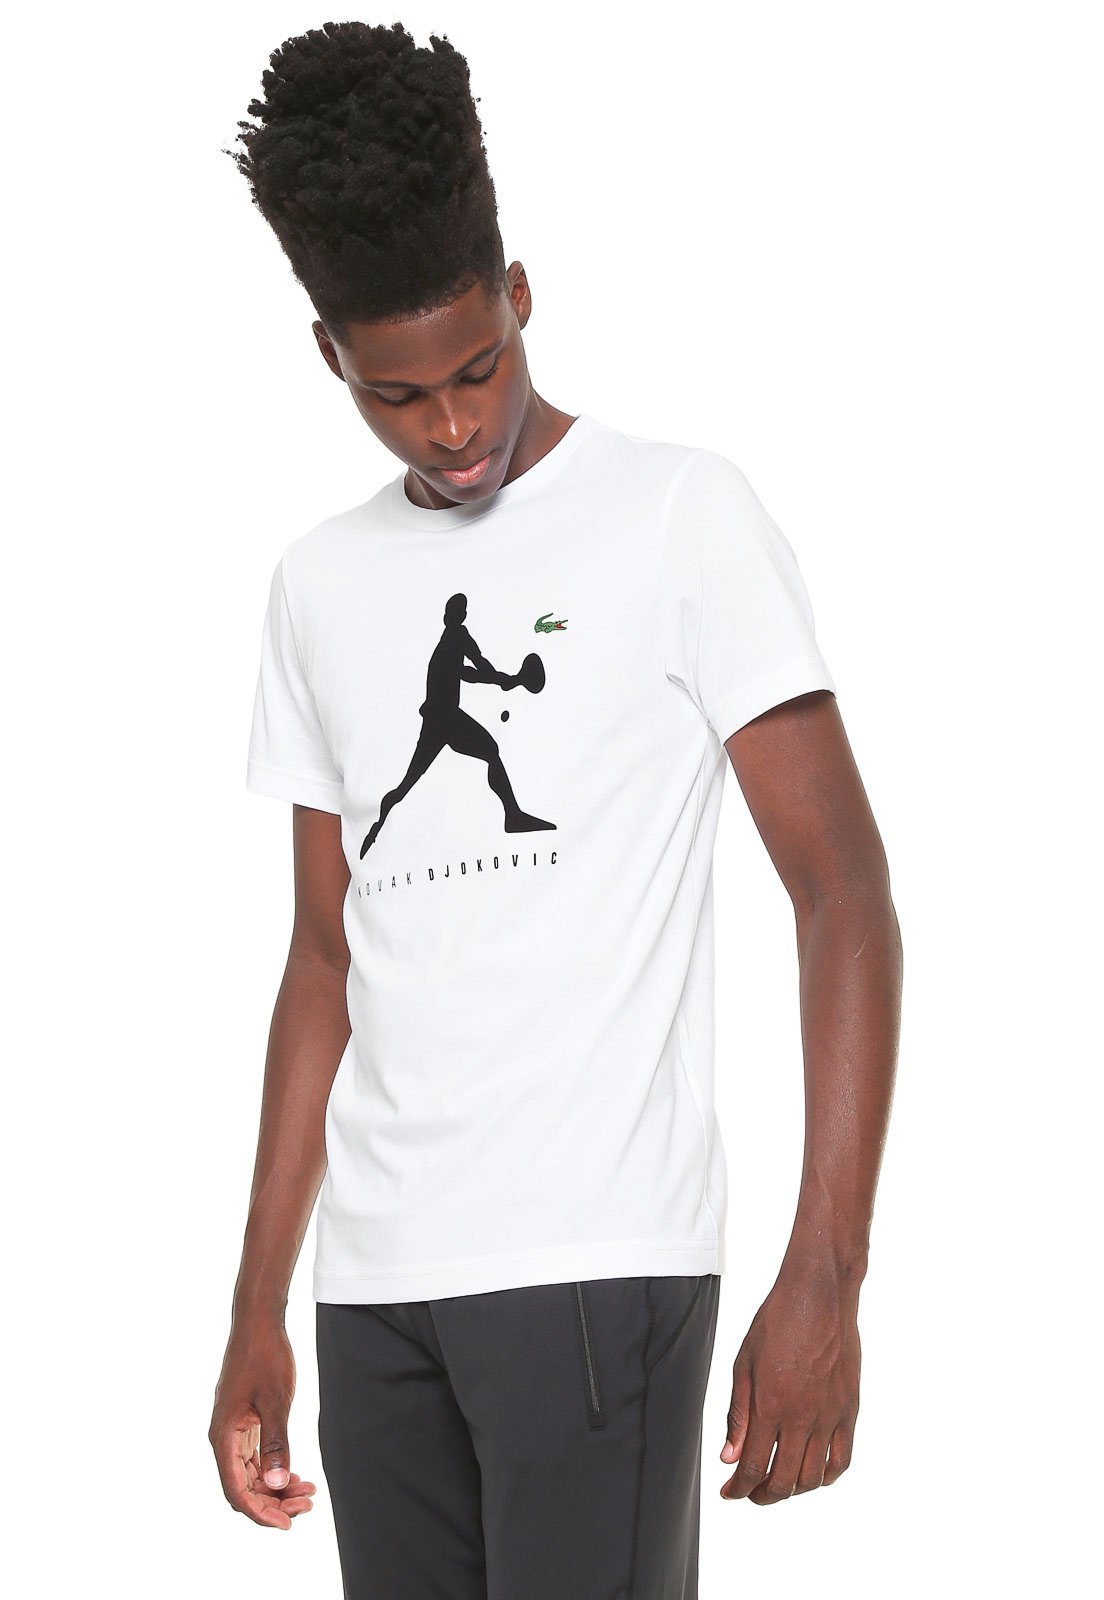 Buy A Mens Lacoste Novak Djokovic Graphic T-Shirt Online